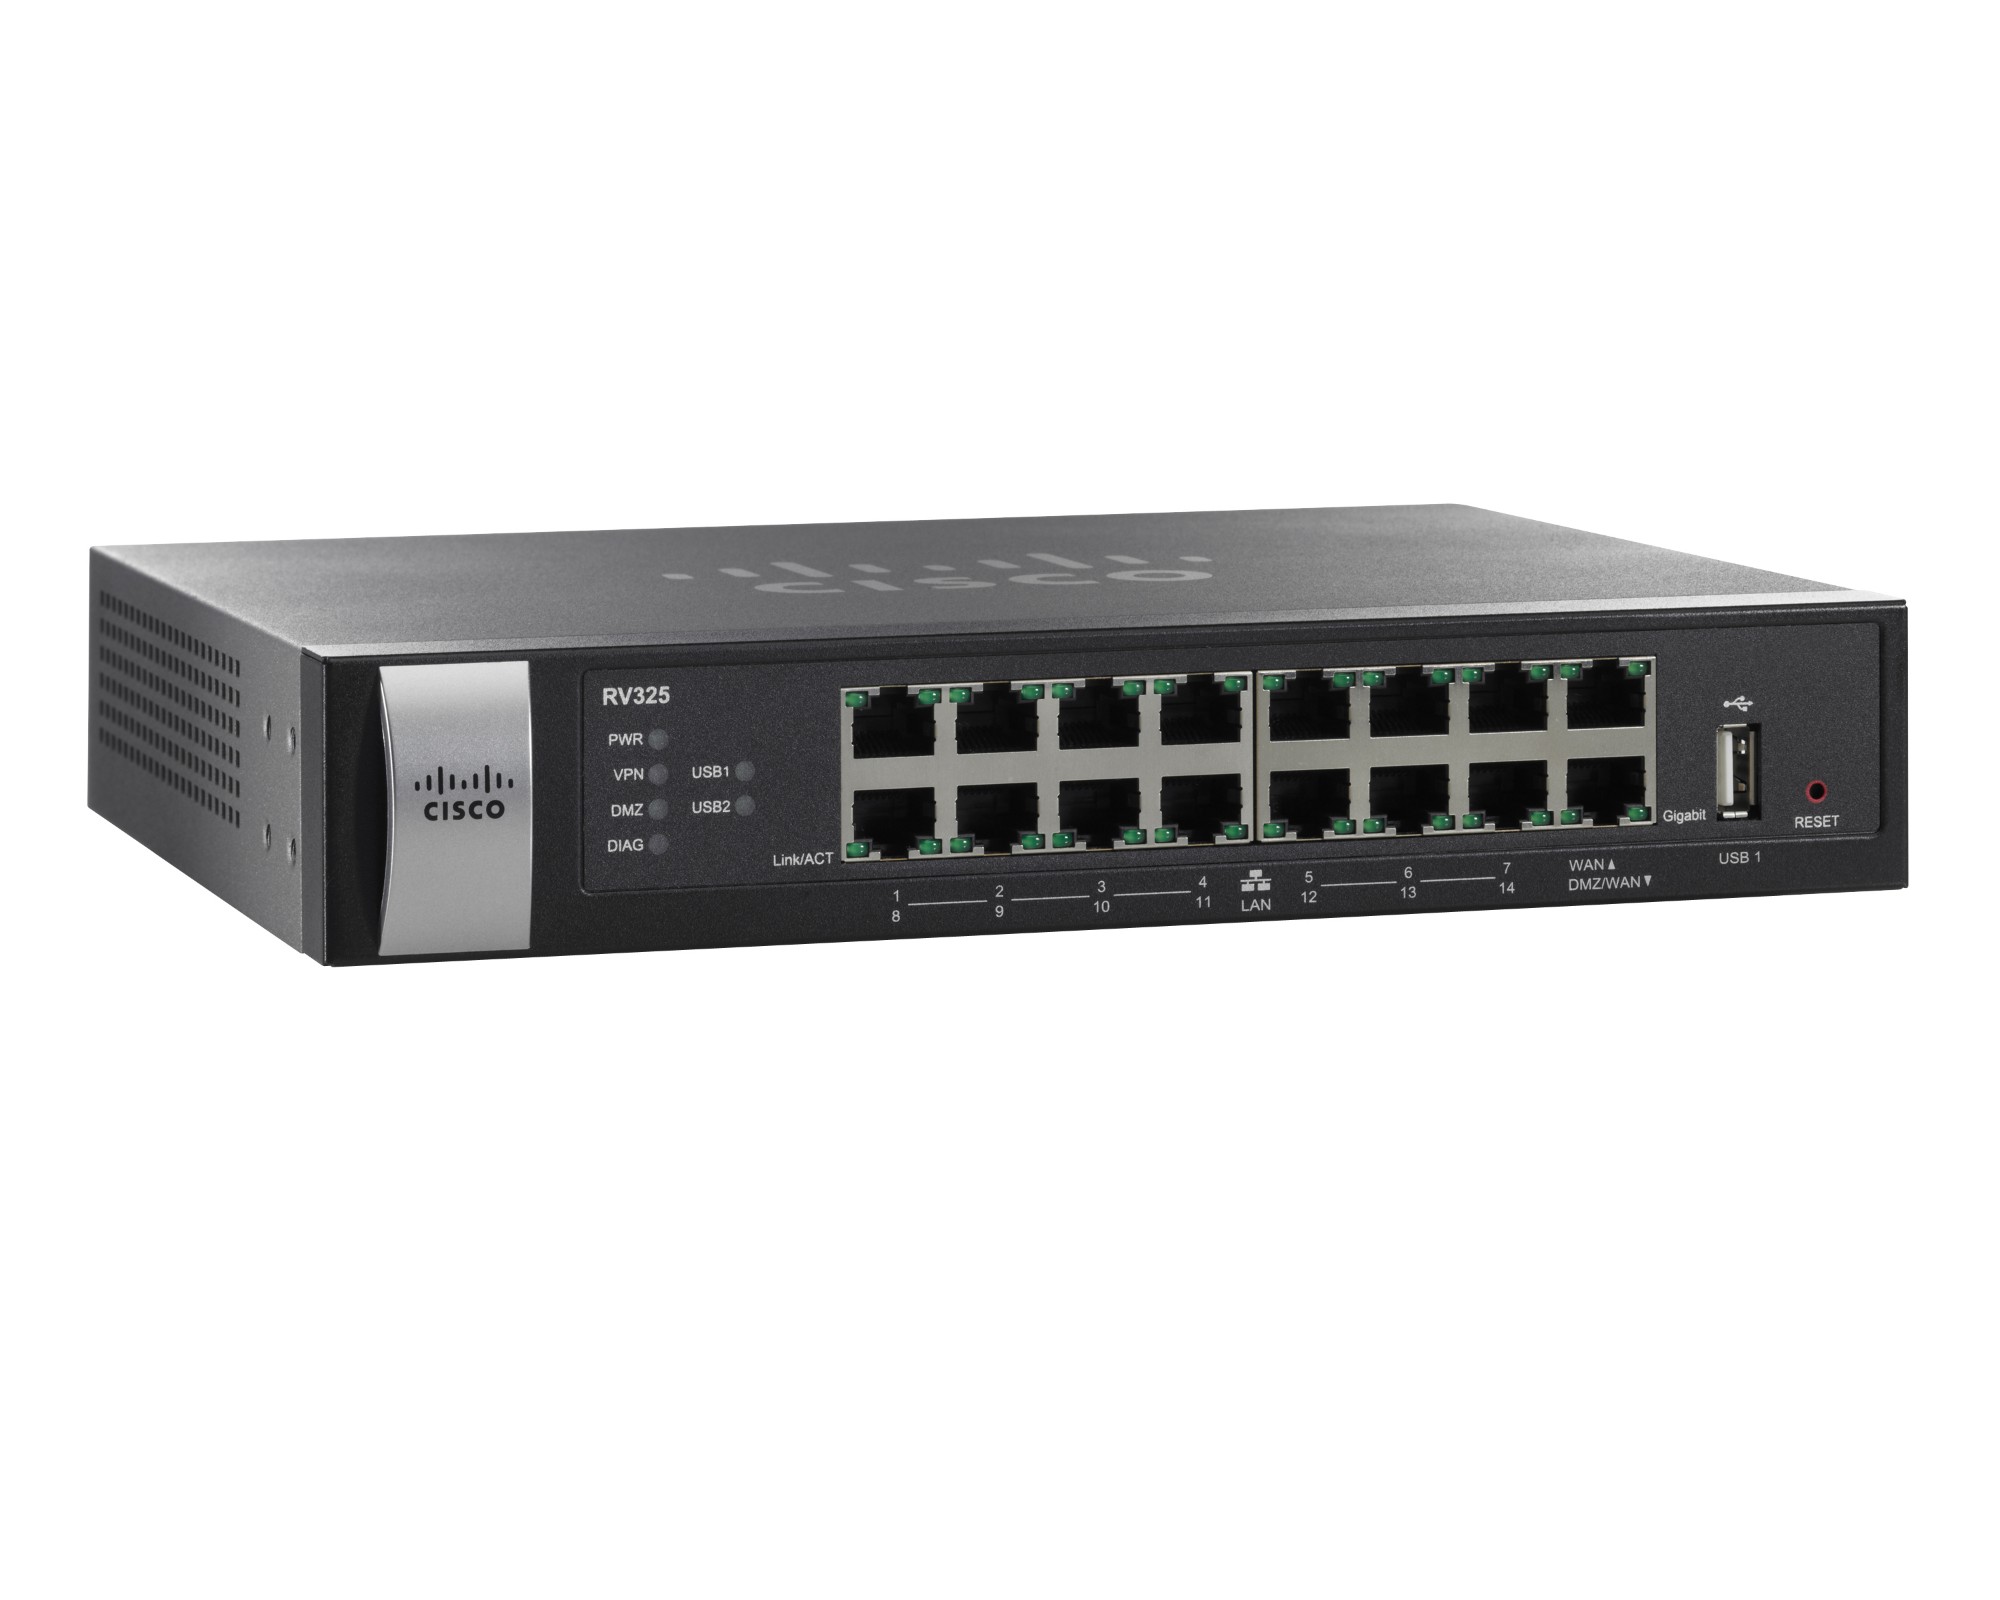 Cisco RV325 Dual WAN VPN Router – 14 GbE Ports